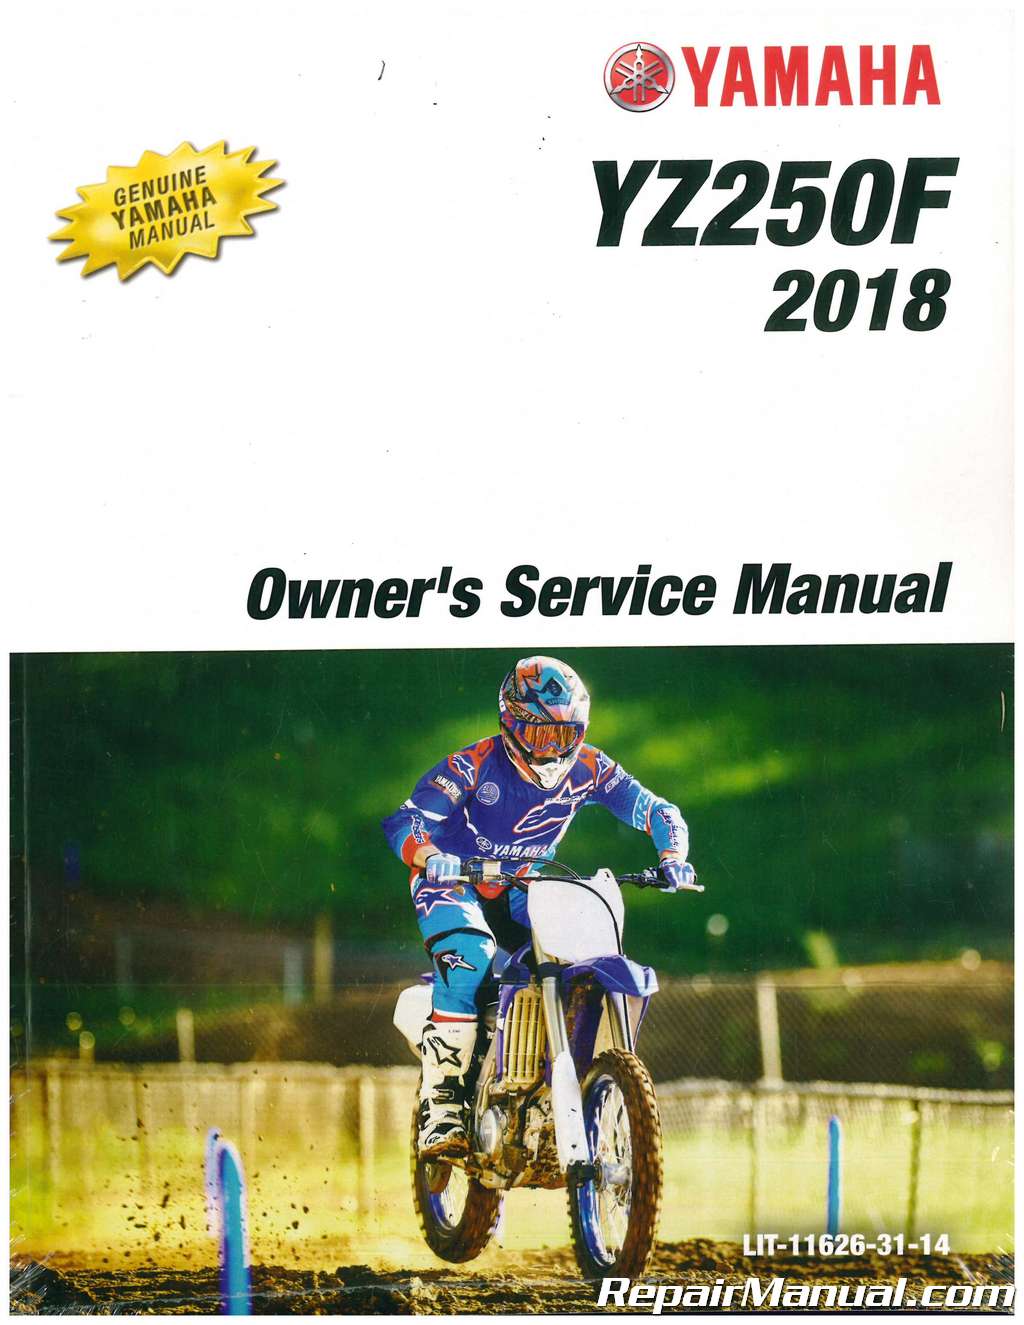 Yamaha yz250f 2005 service manual free download